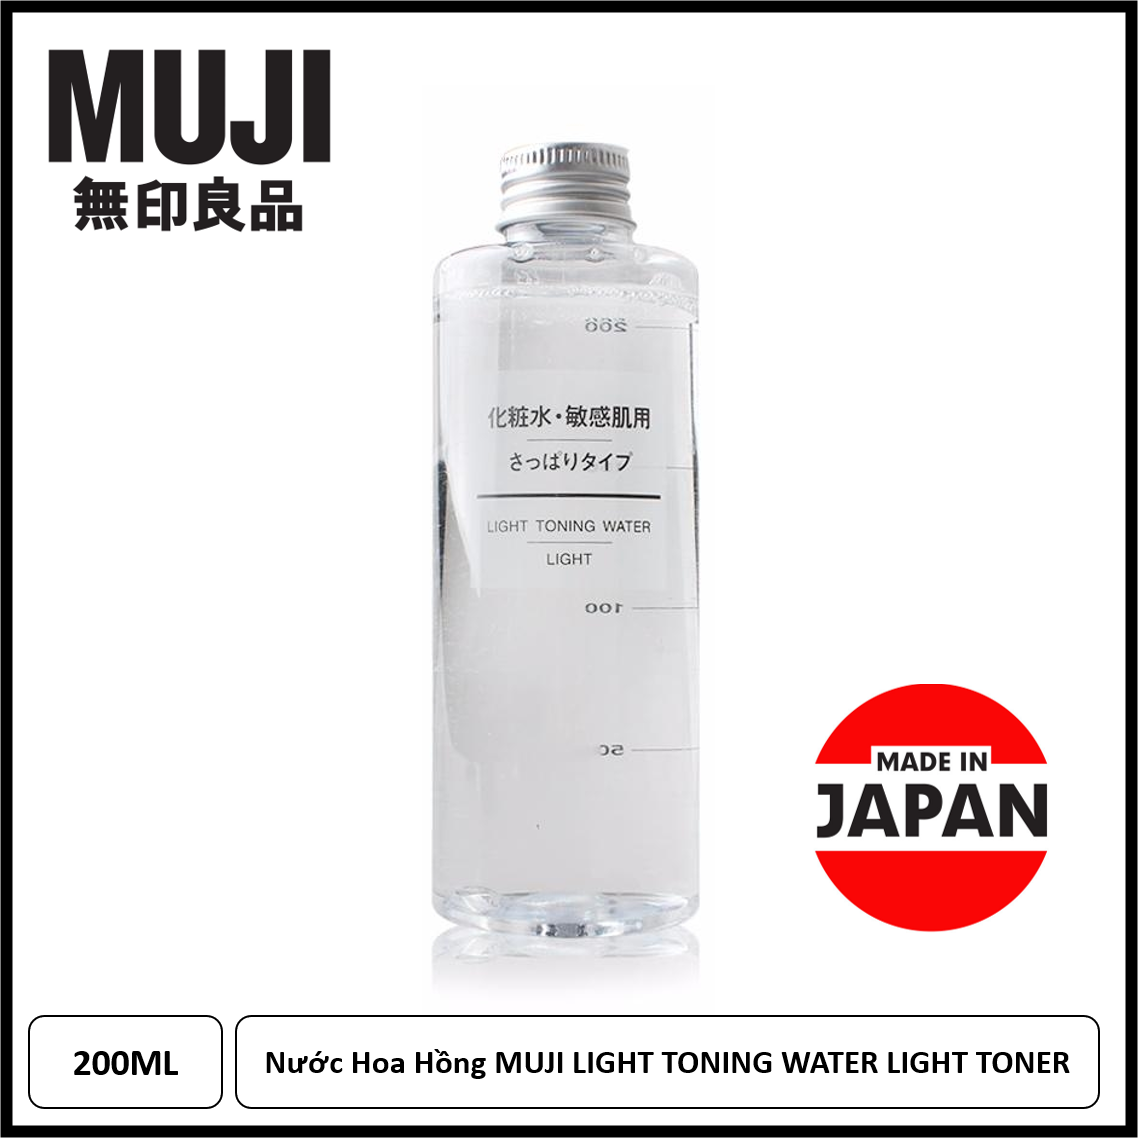 HCMNước hoa hồng Muji Light Toning Water Toner 200ml - Light